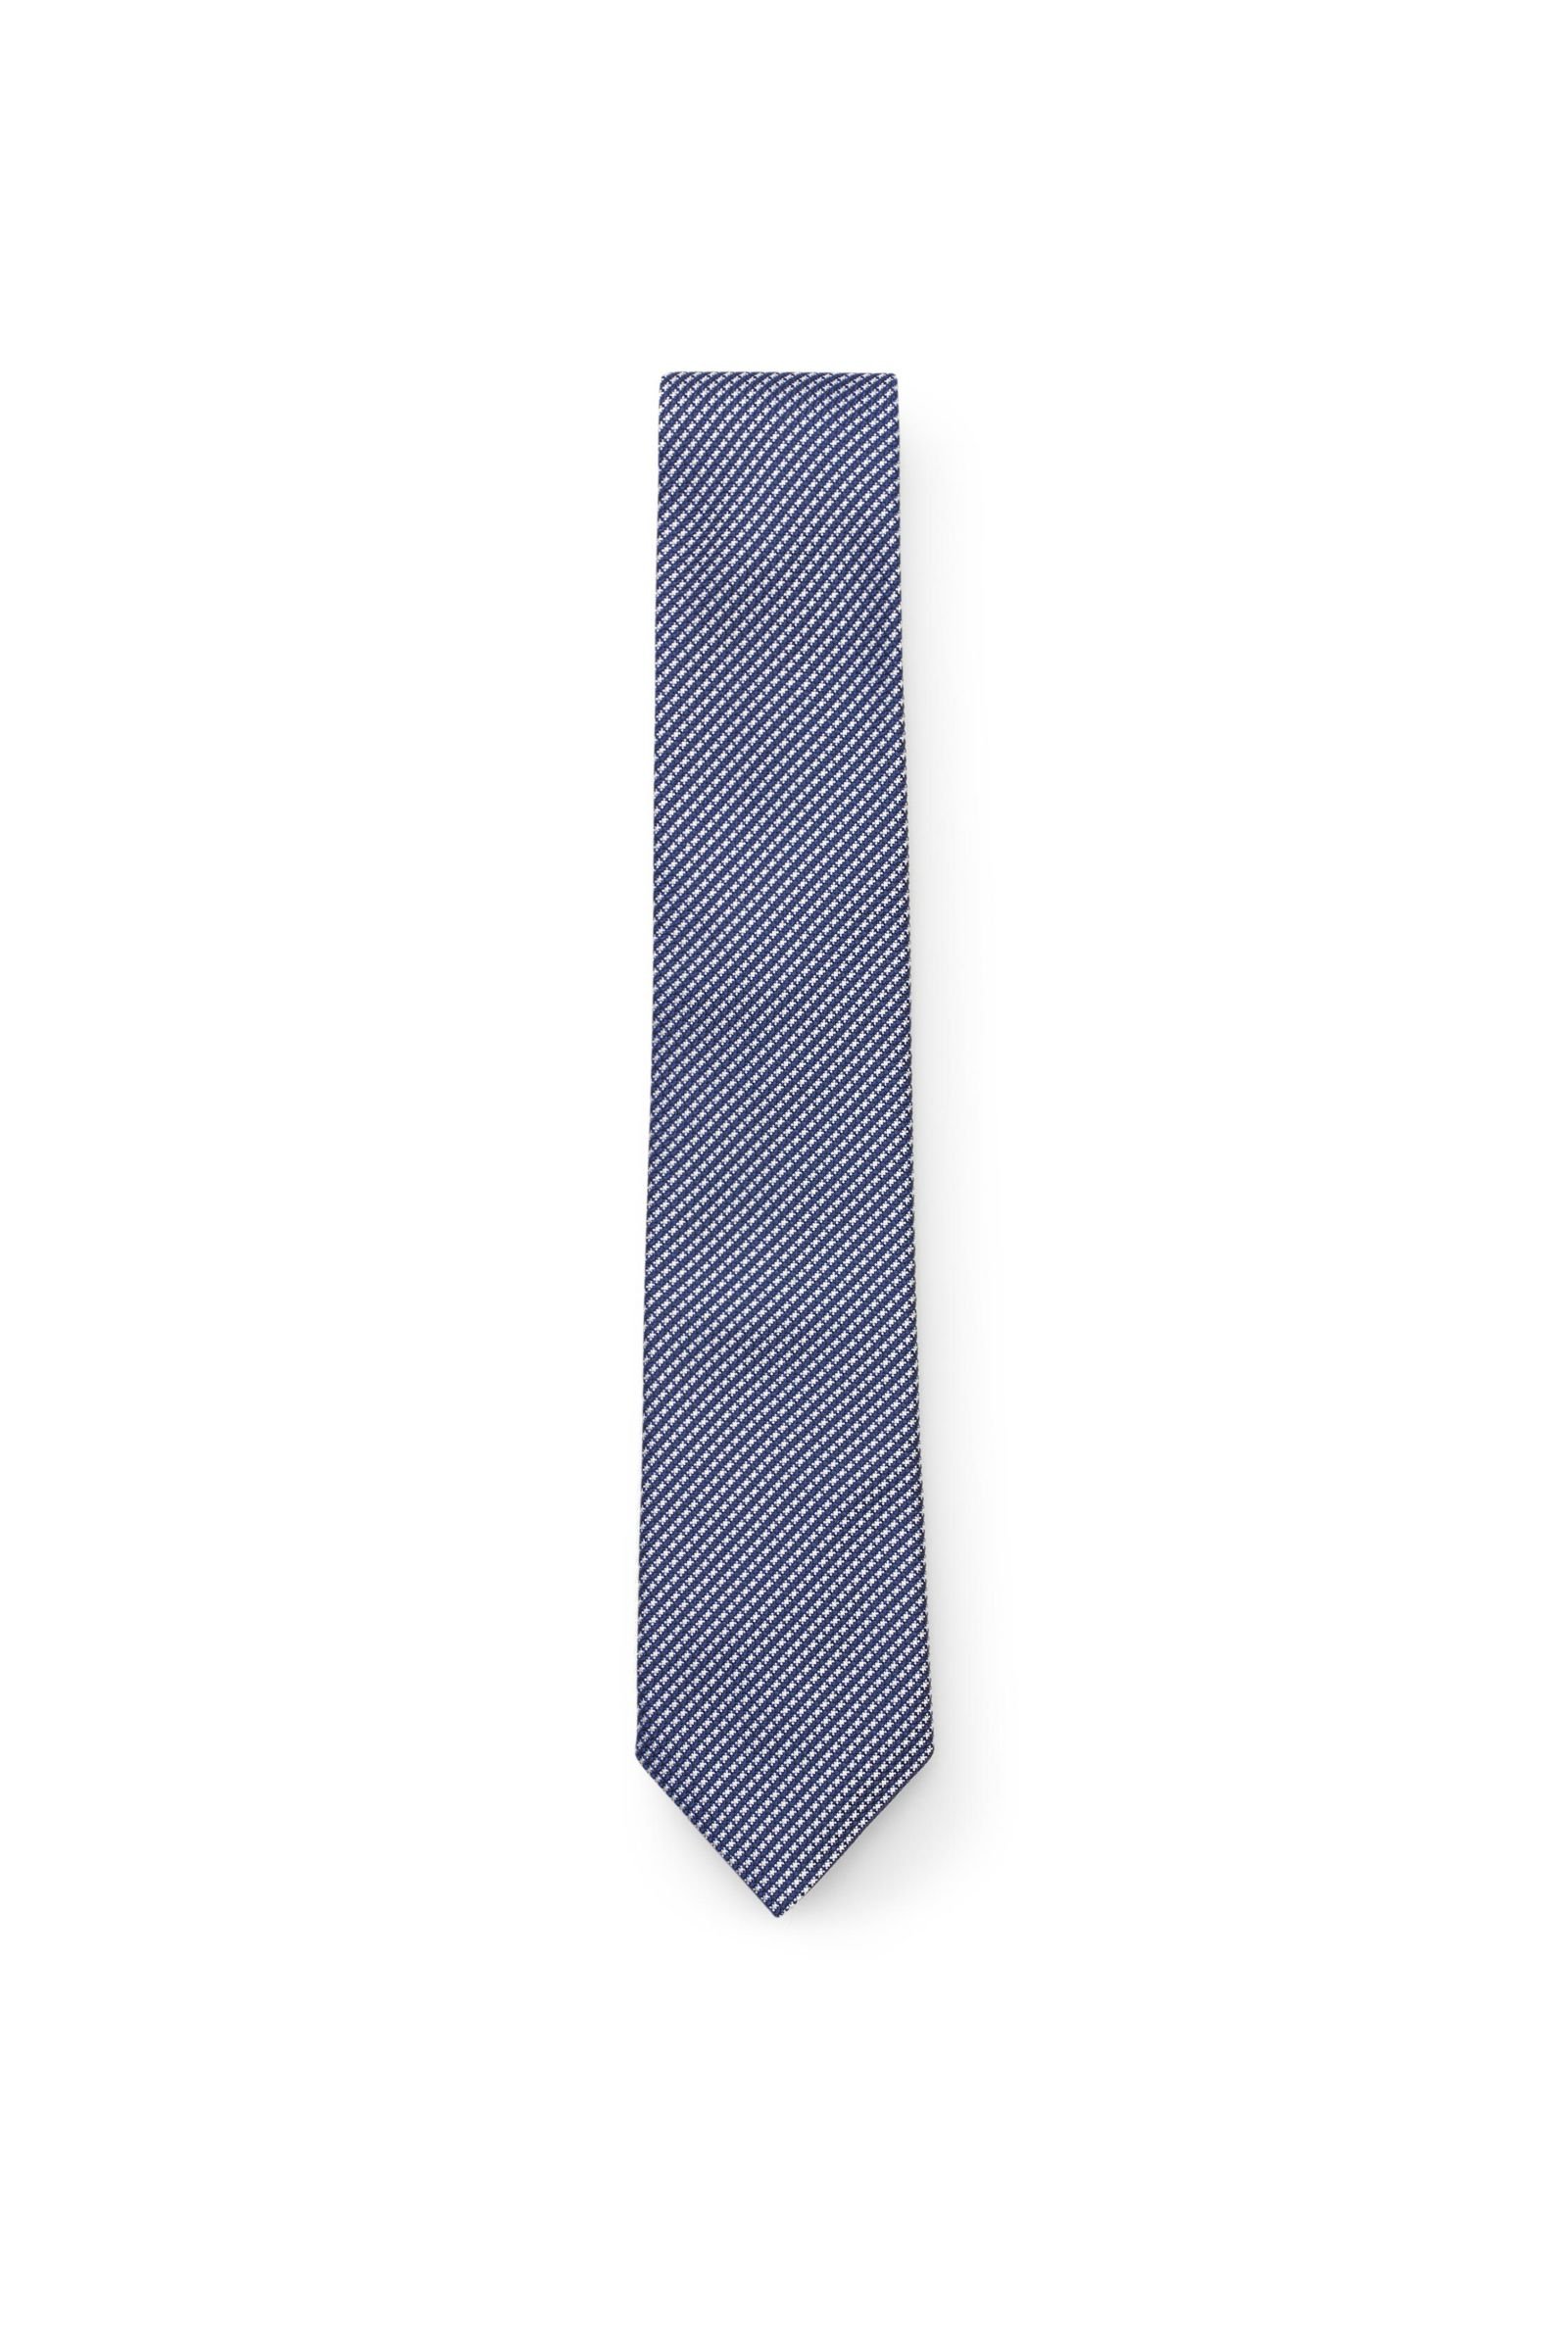 Silk tie navy/white patterned